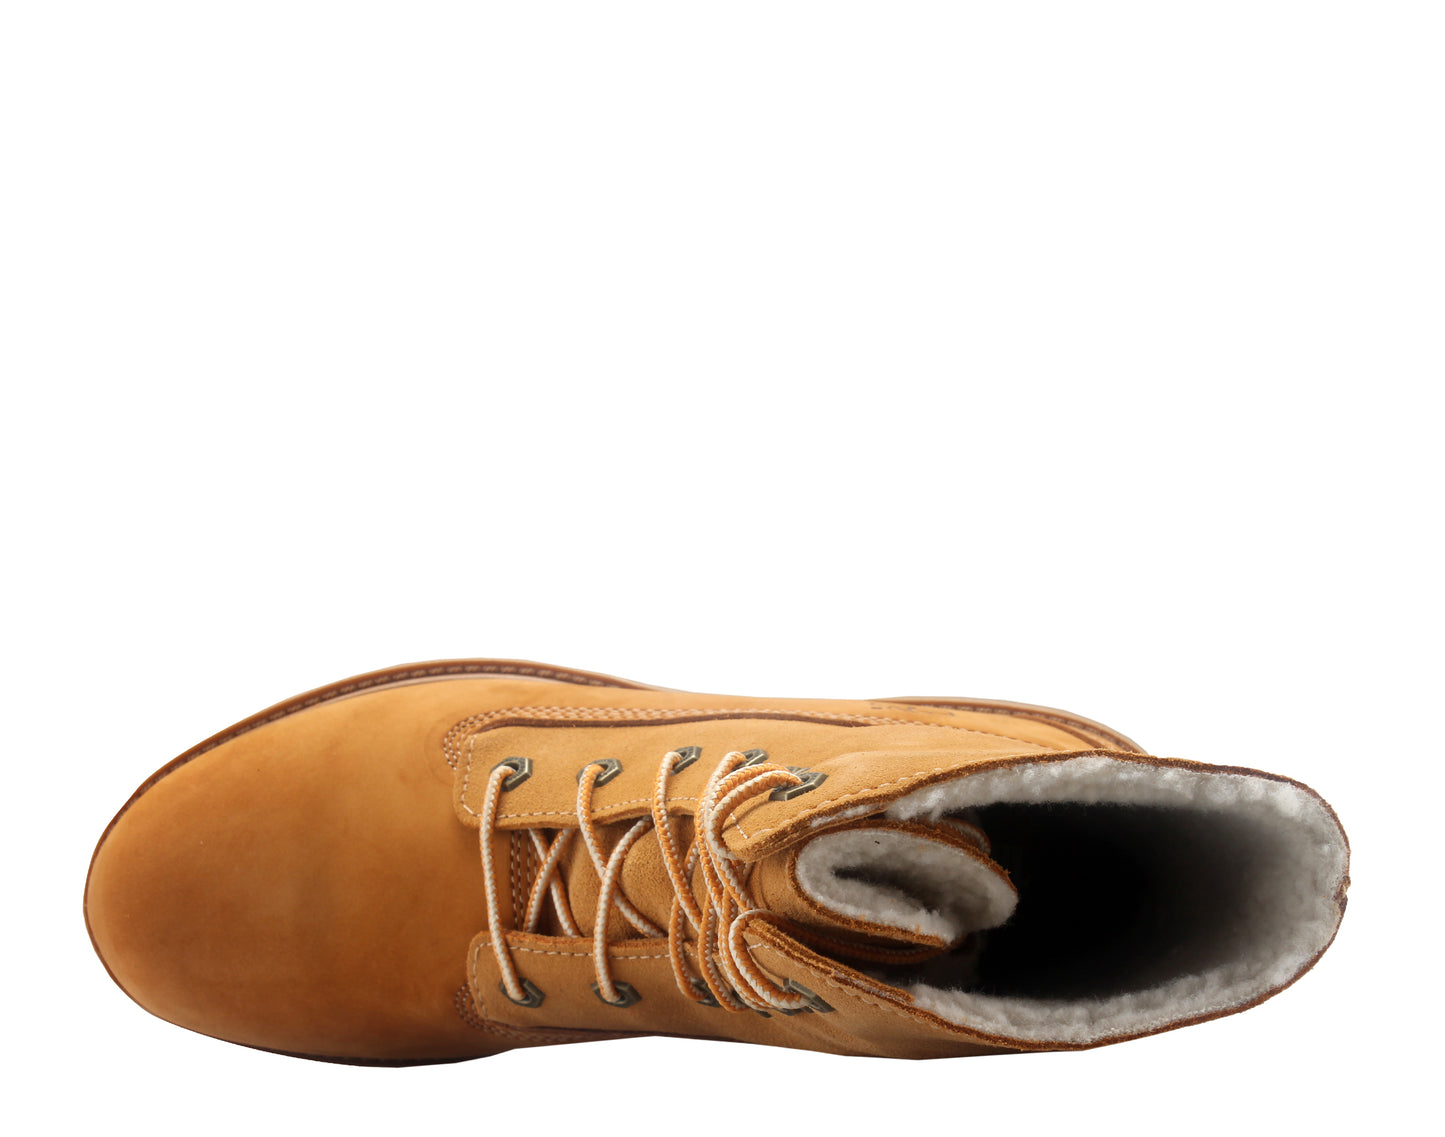 Timberland Authentics Teddy Fleece Fold-Down Wheat Nubuck Women's Boots 8329R